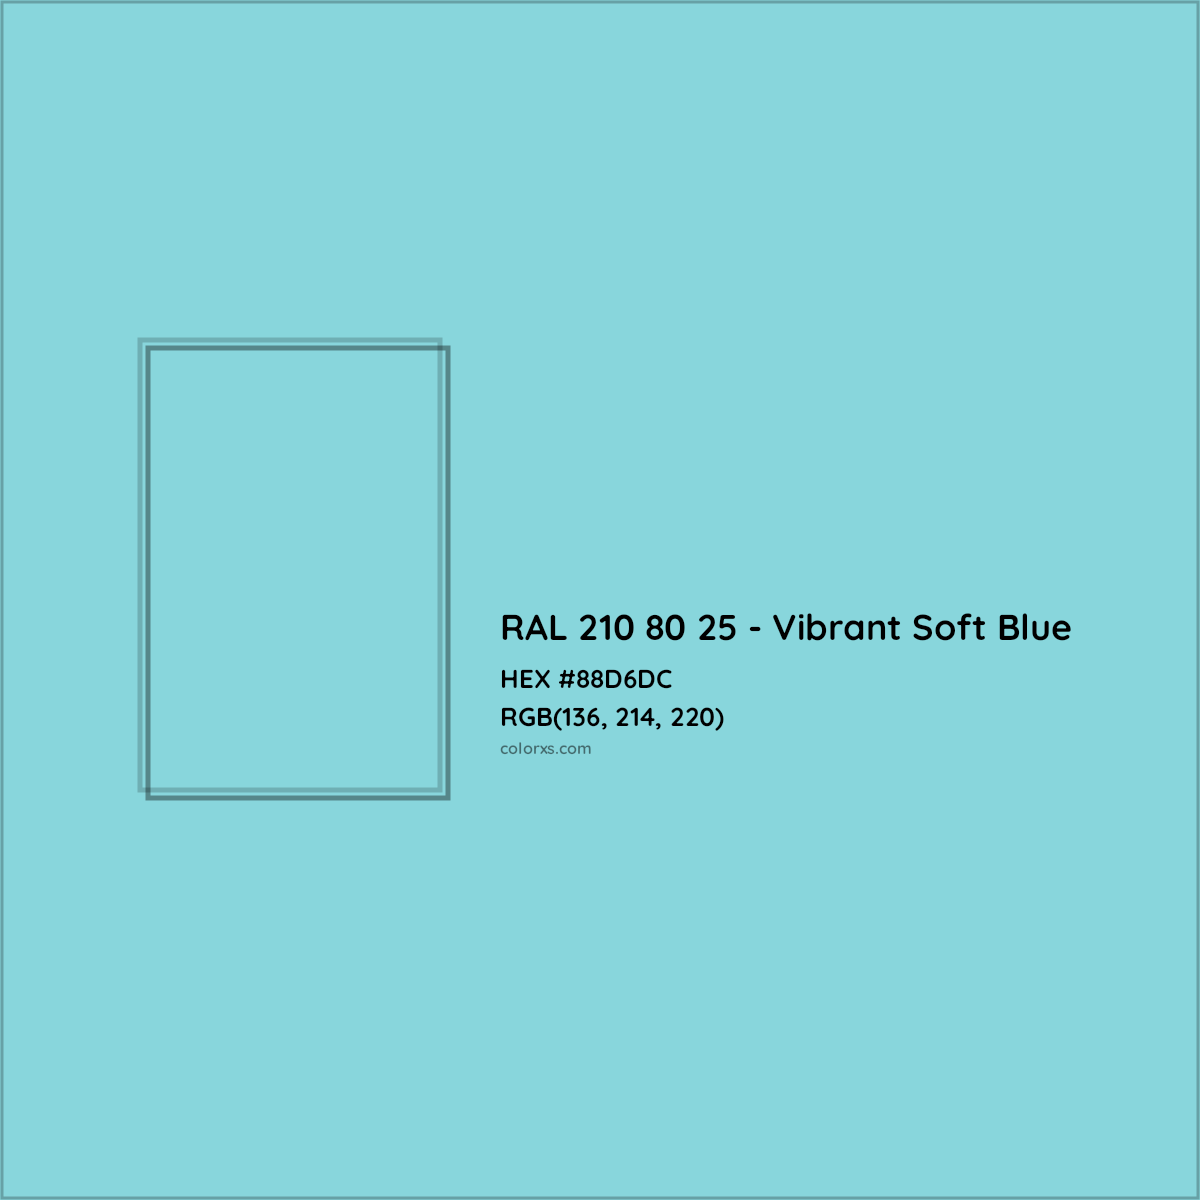 HEX #88D6DC RAL 210 80 25 - Vibrant Soft Blue CMS RAL Design - Color Code